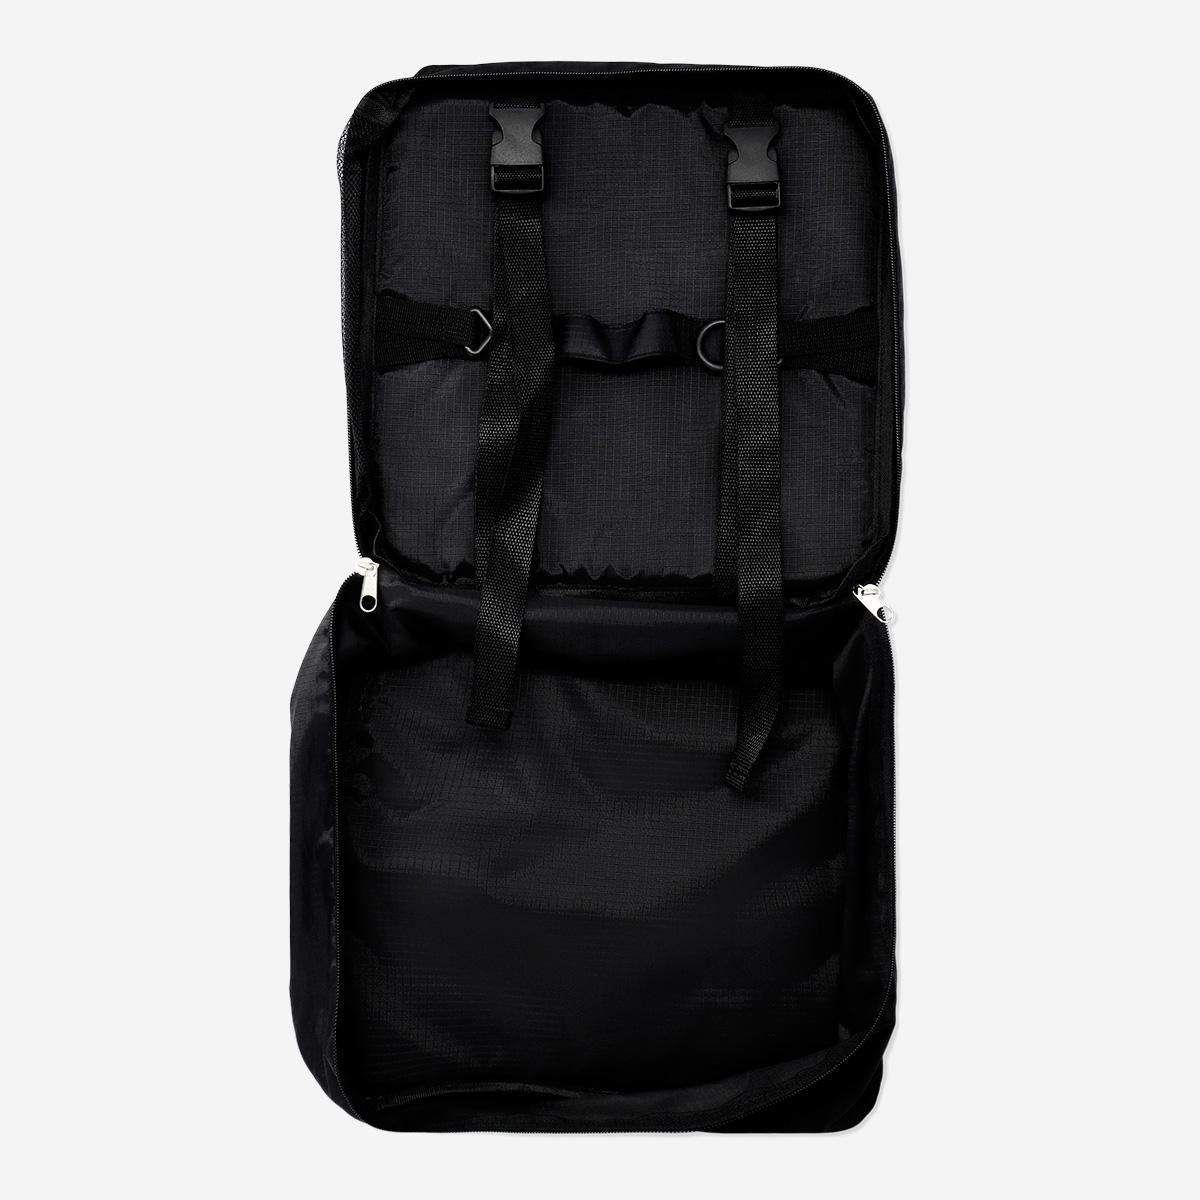 Black foldable wardrobe travel bag